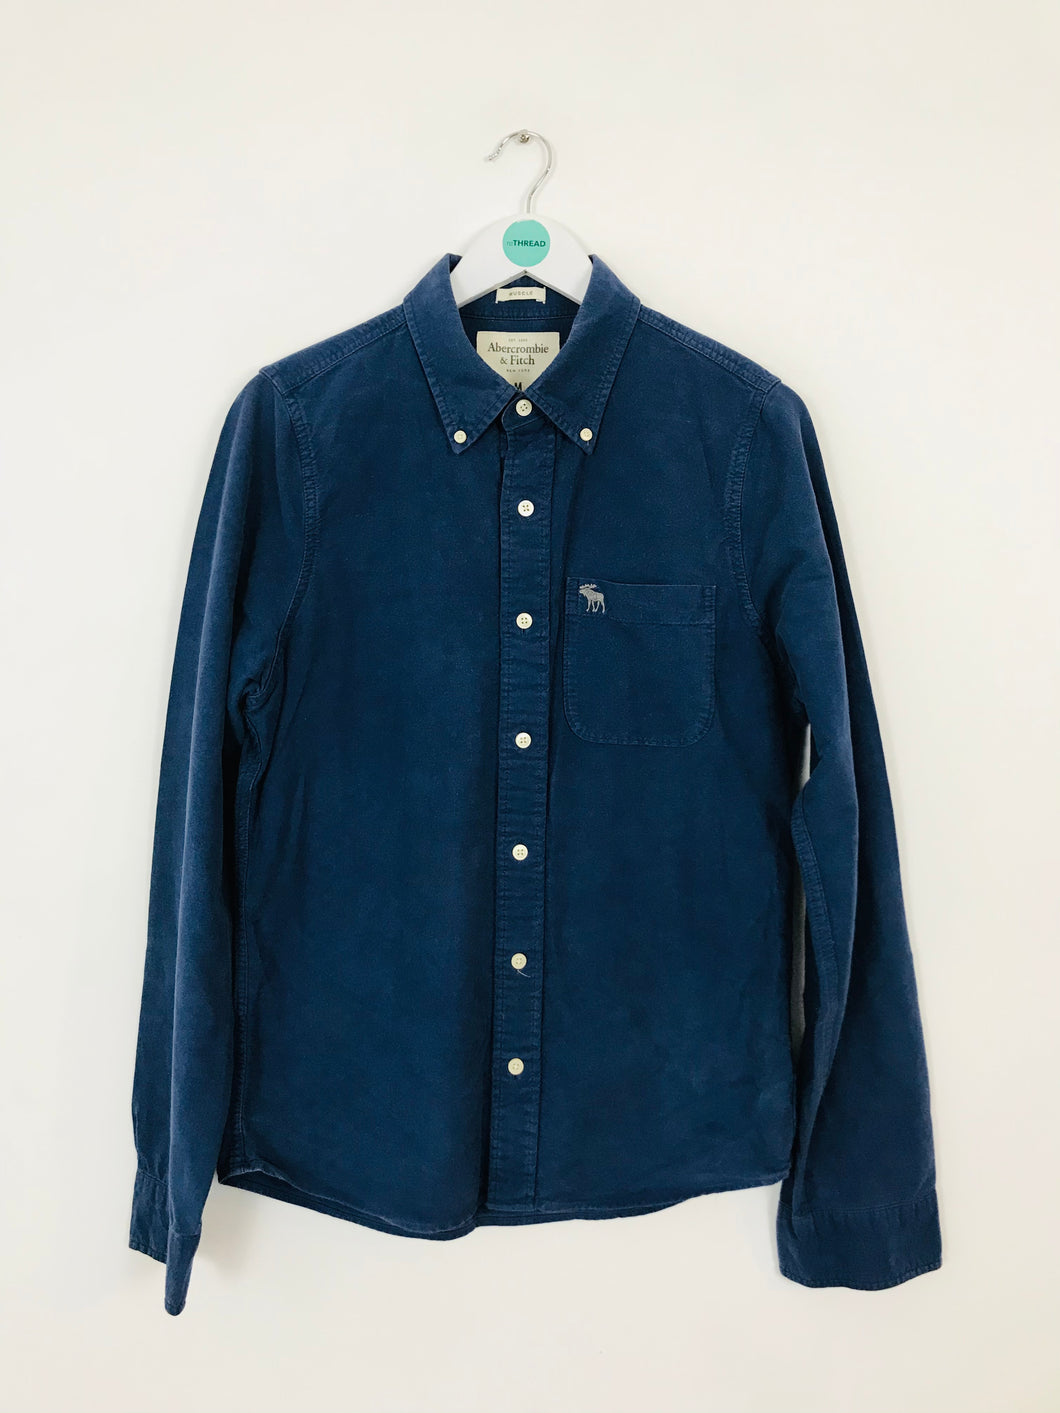 Abercrombie & Fitch Men’s Long Sleeve Shirt | M | Navy Blue